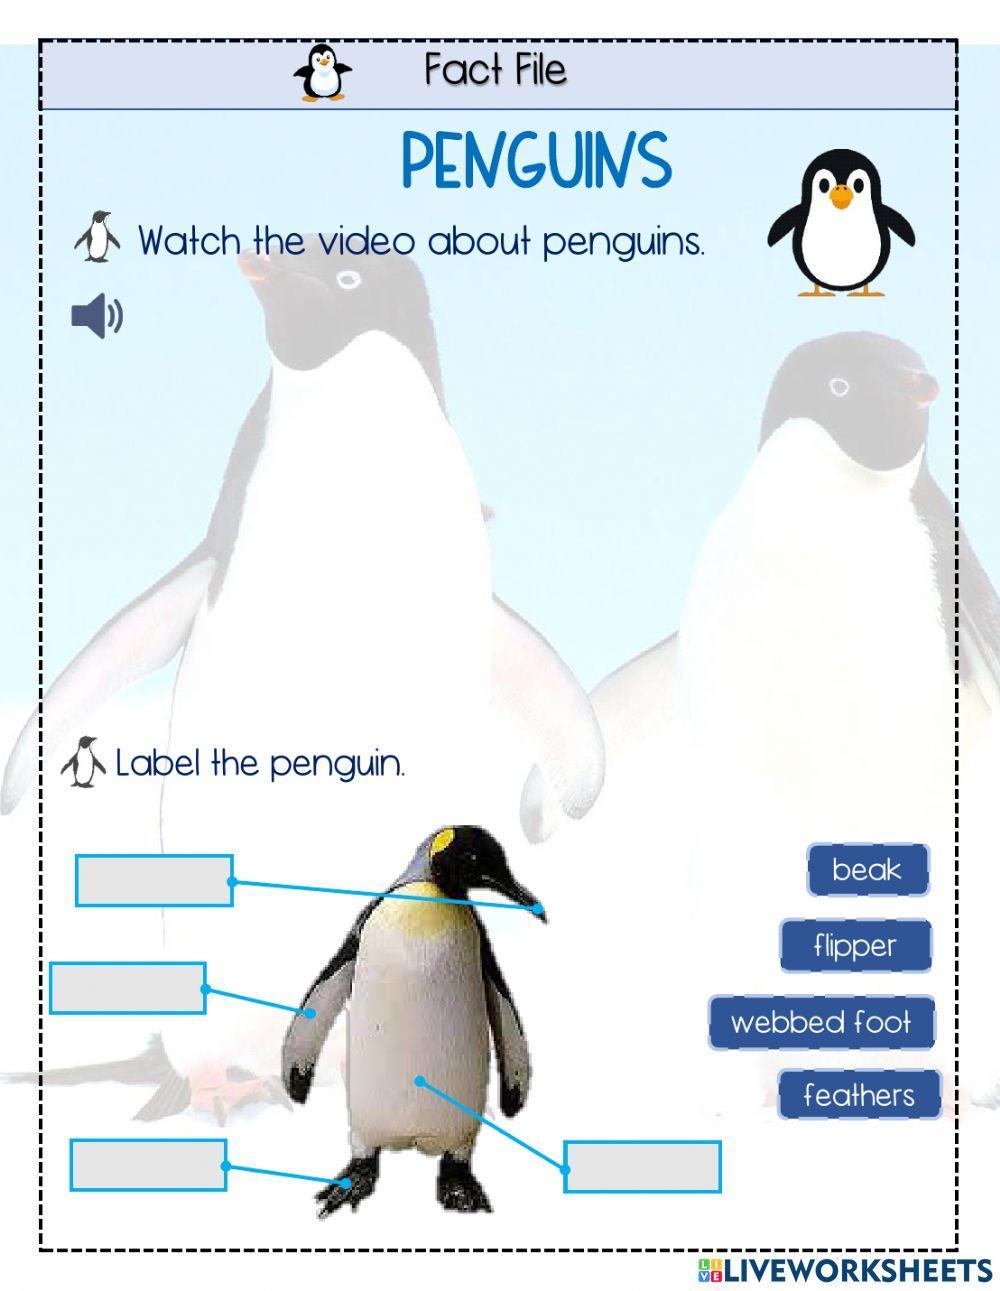 Penguins Fact File